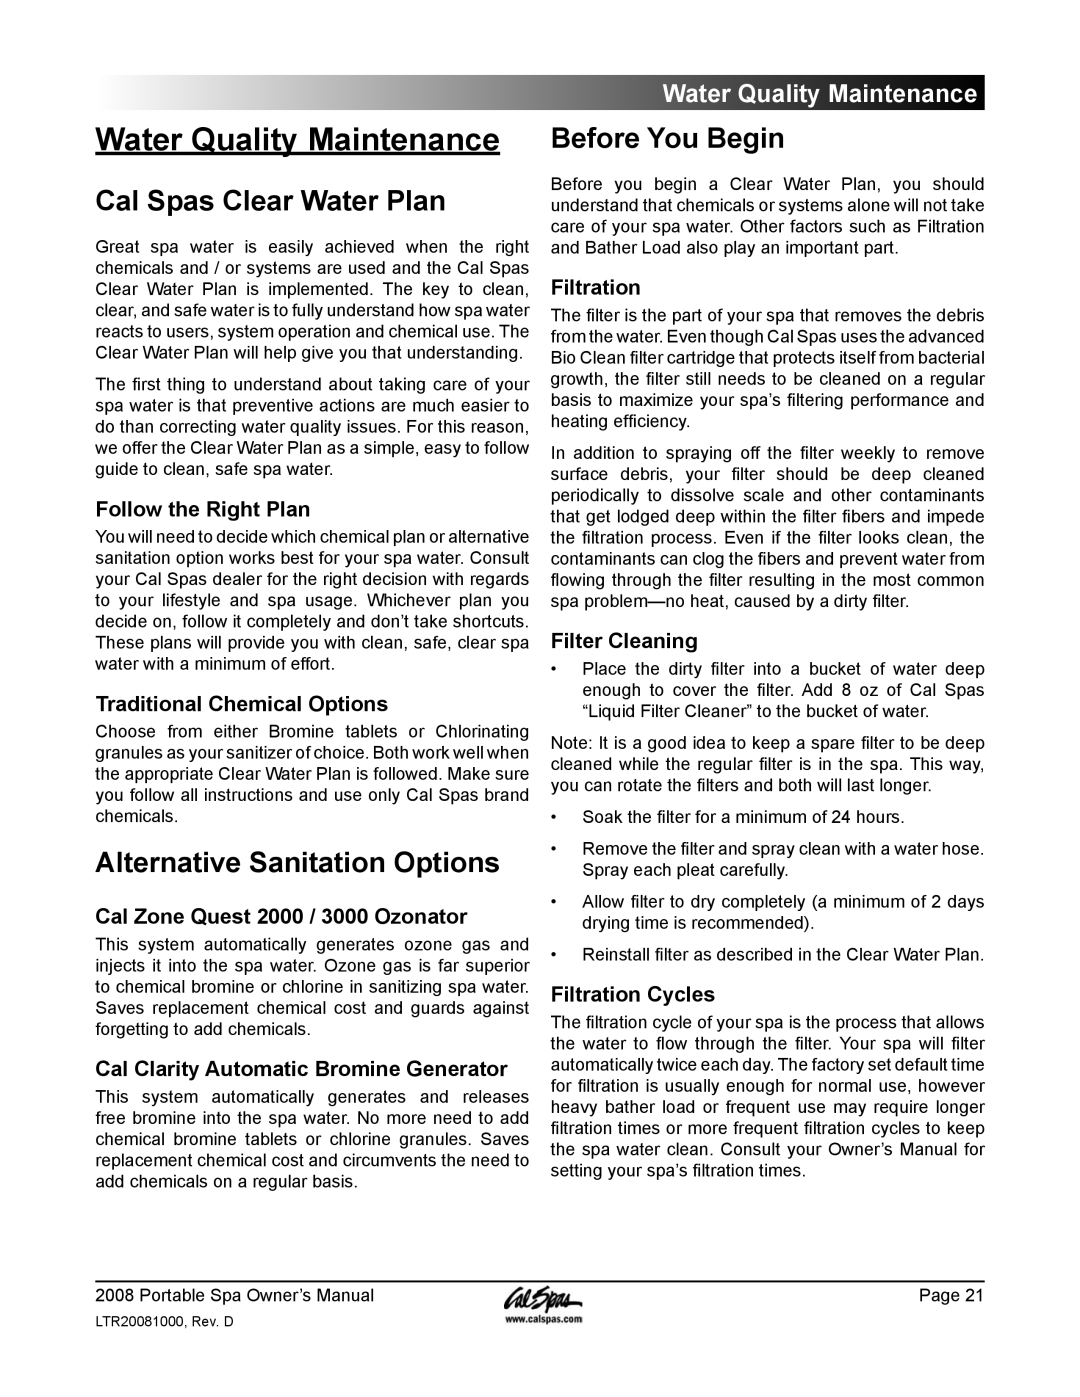 Cal Spas GFCI manual Water Quality Maintenance, Cal Spas Clear Water Plan, Alternative Sanitation Options, Before You Begin 